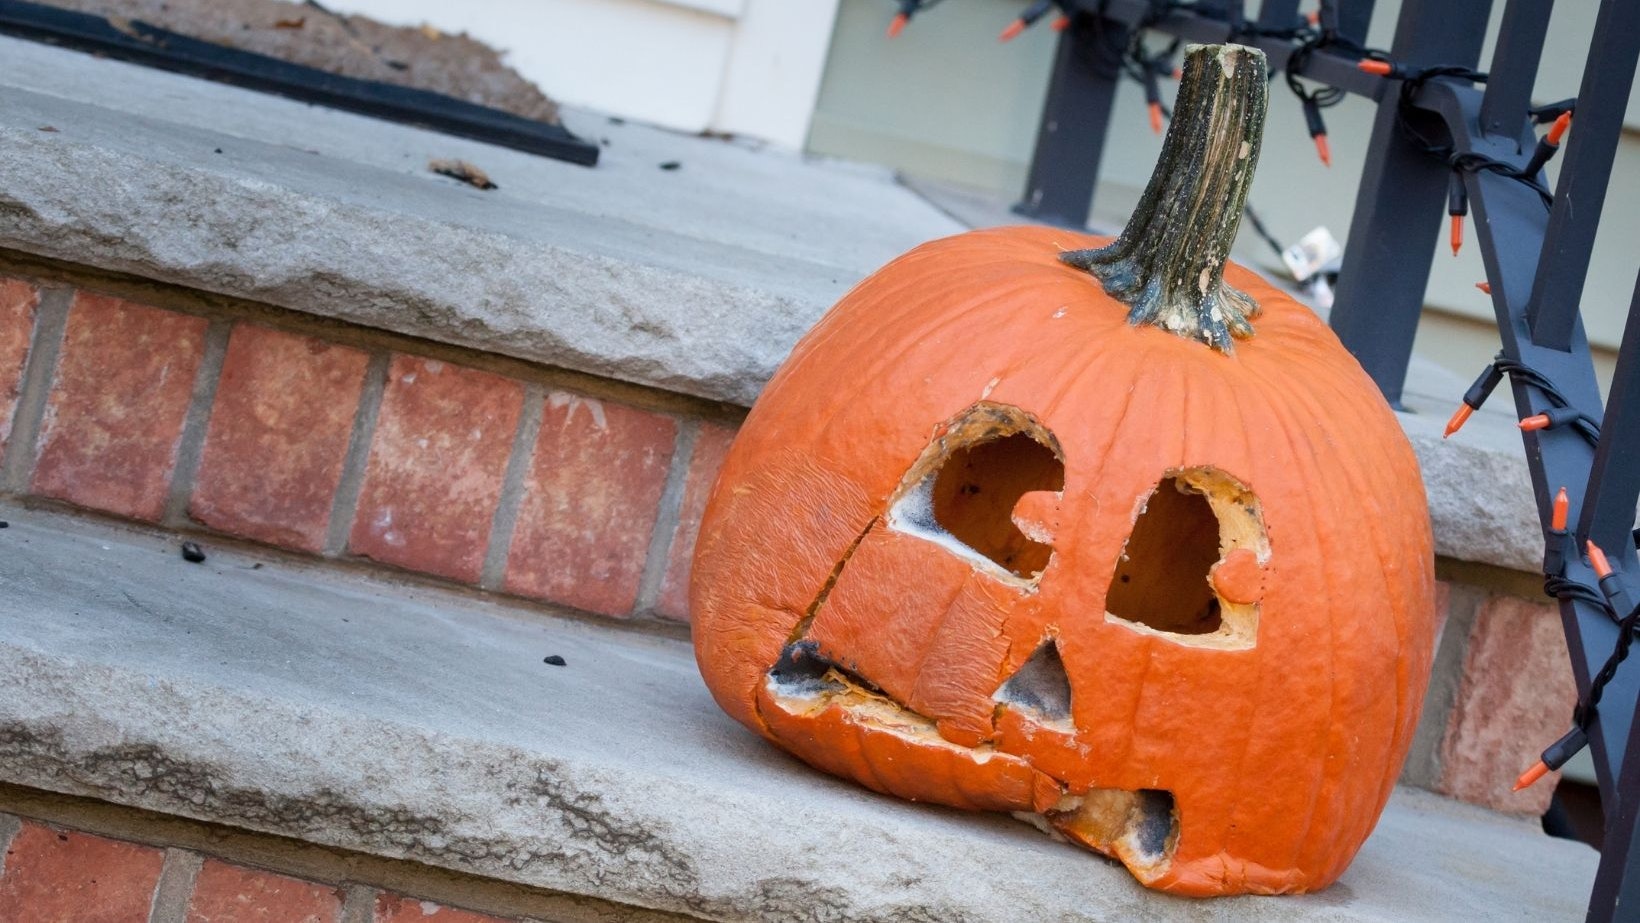 5 Ways To Minimize Waste And Maximize Fun This Halloween3